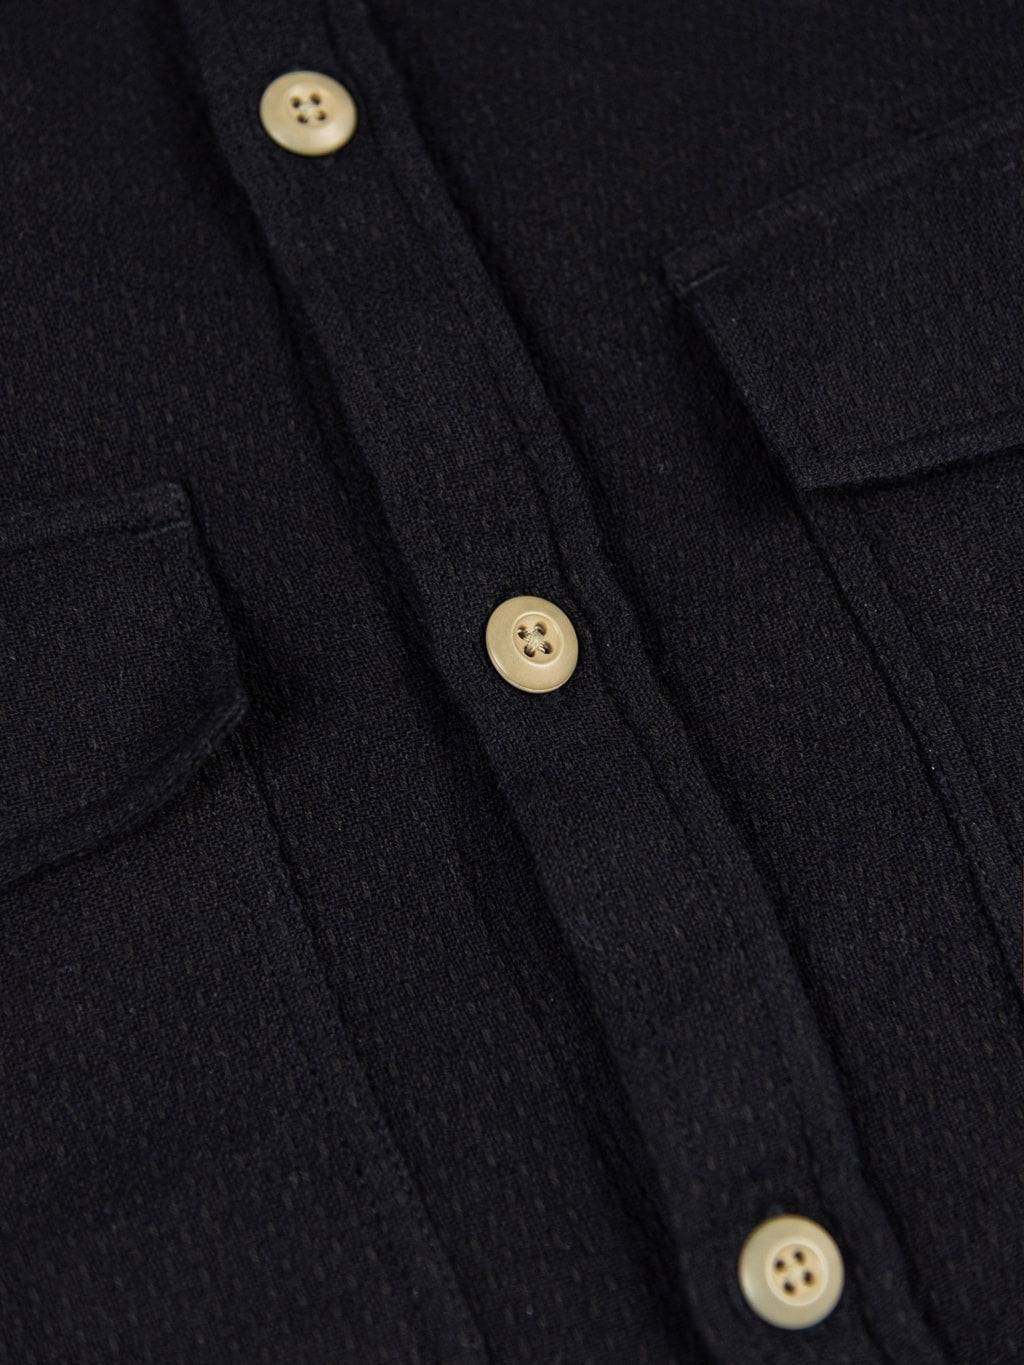 3sixteen CPO Shirt black Sashiko replica bdu buttons